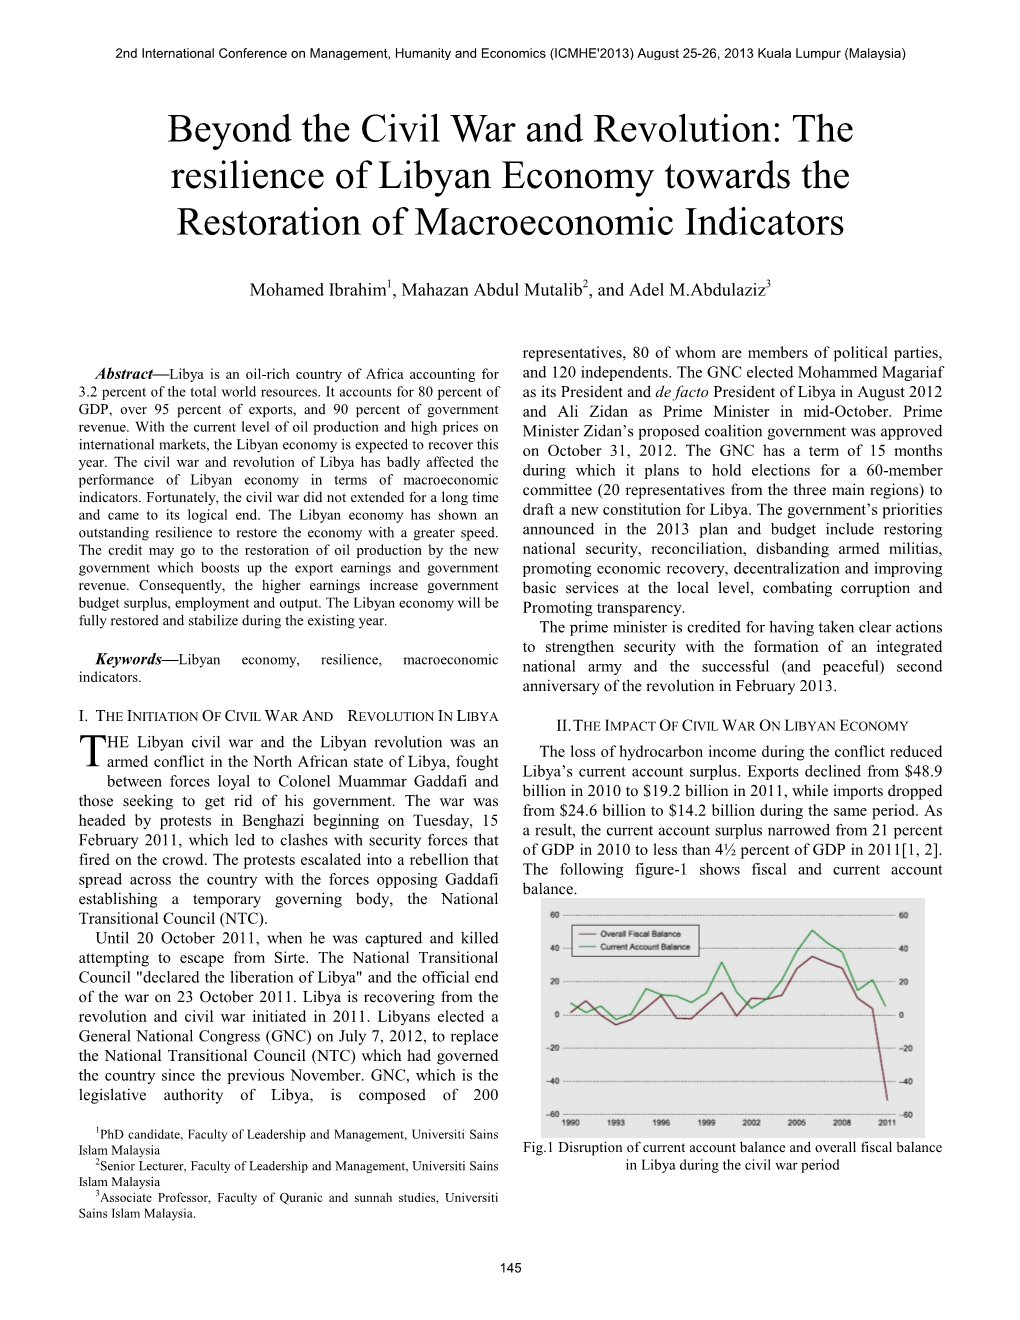 The Resilience of Libyan Economy Towards the Restoration of Macroeconomic Indicators